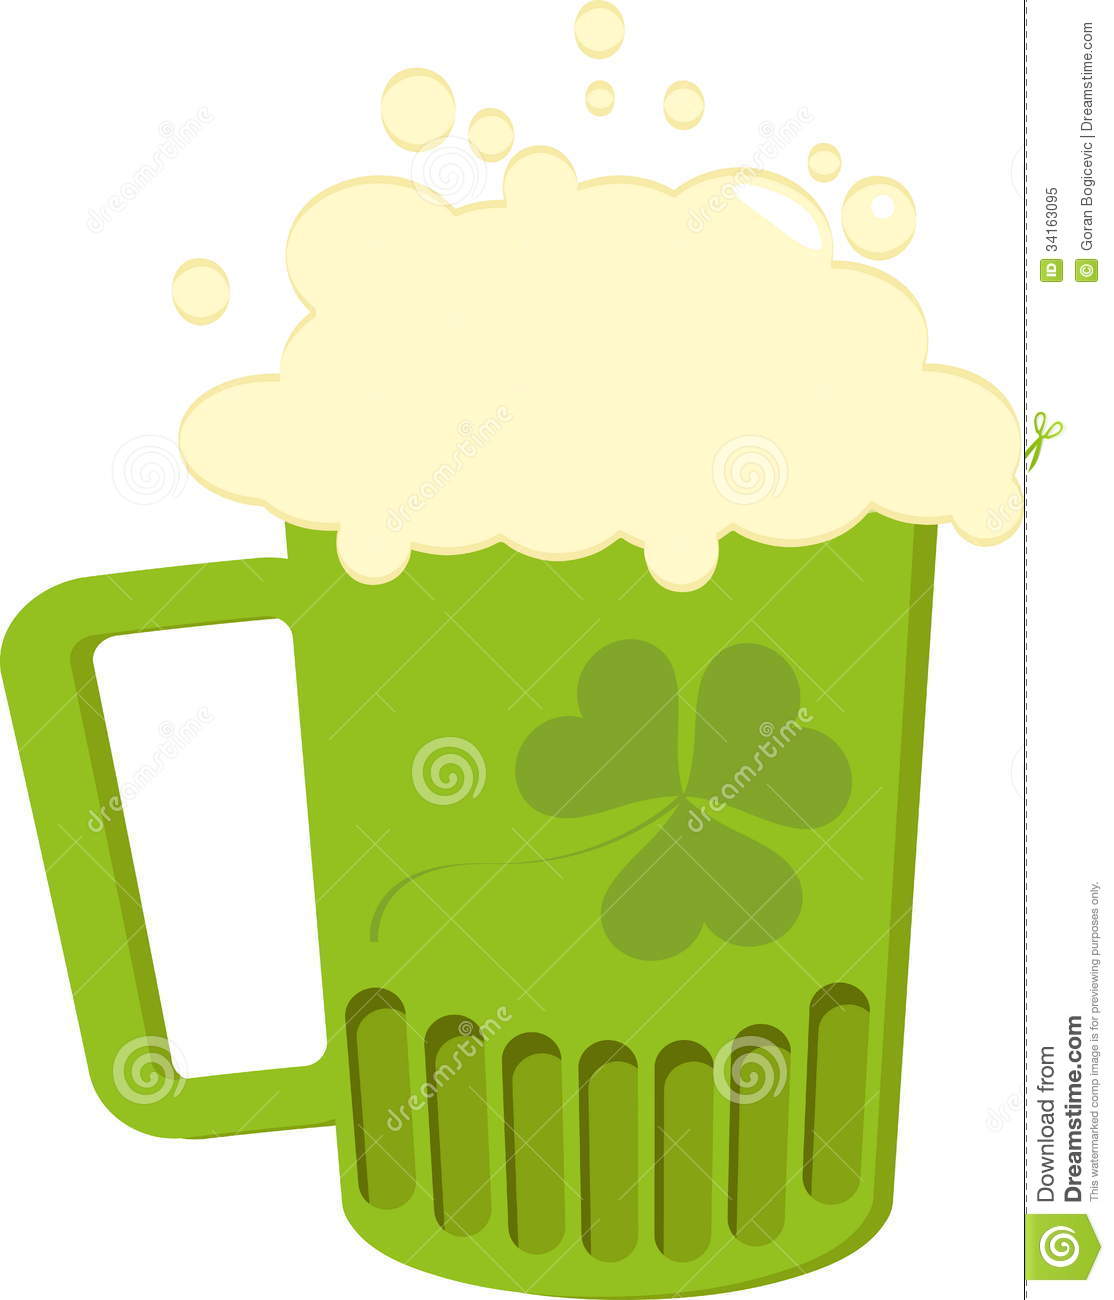 Irish Beer Royalty Free Stock Photo   Image  34163095